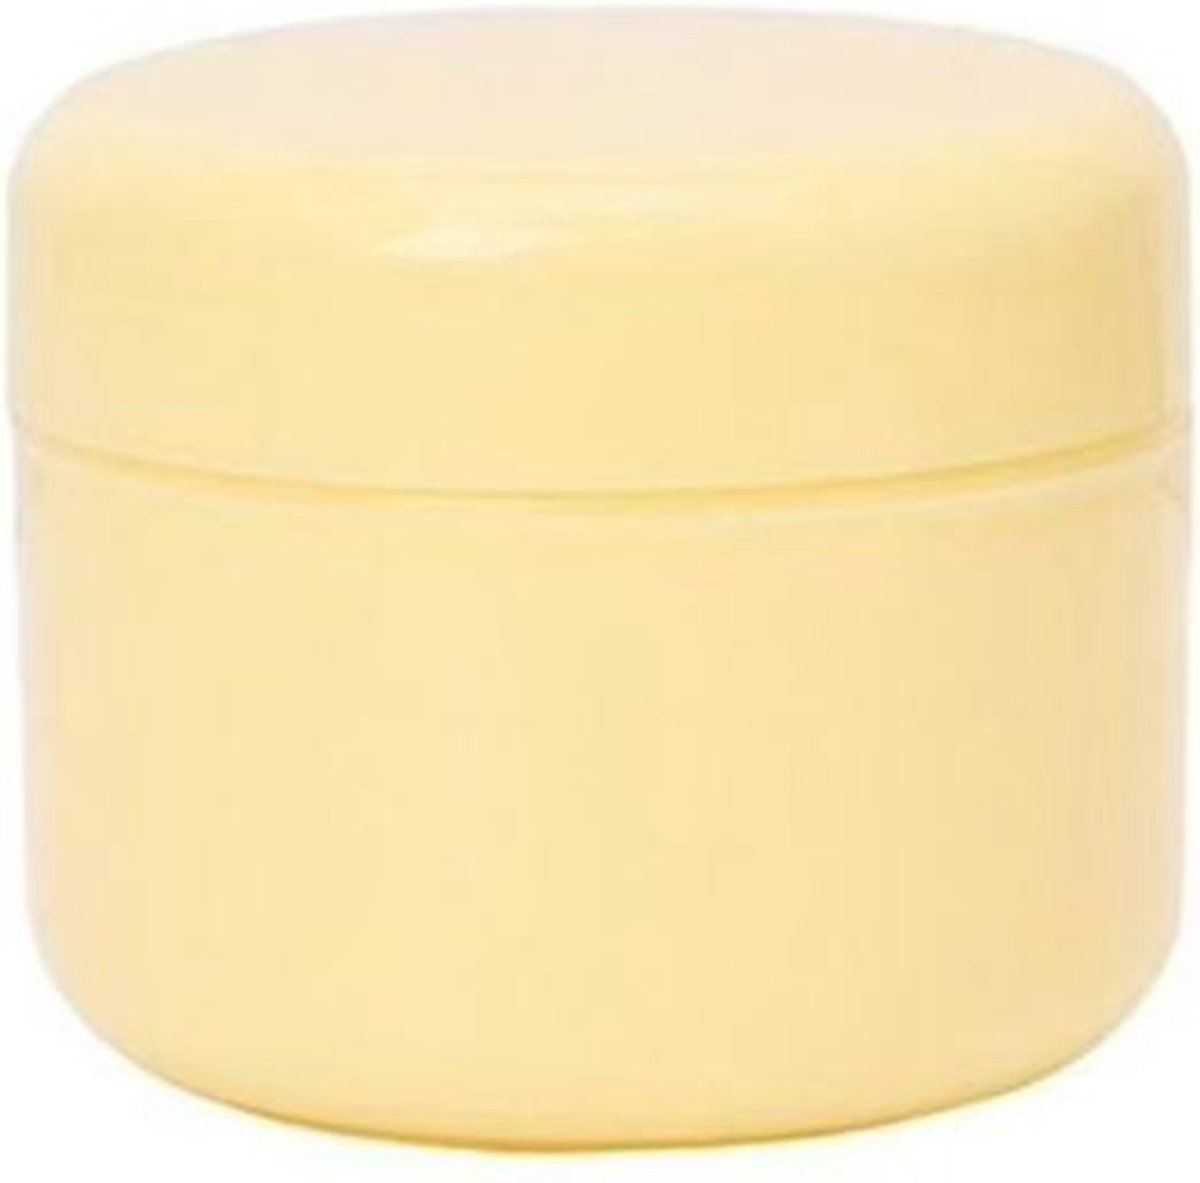 Leeg make-up potje - lichtgeel - 100 gram - aromatherapie - hervulbaar - JB Oils & Accessoires